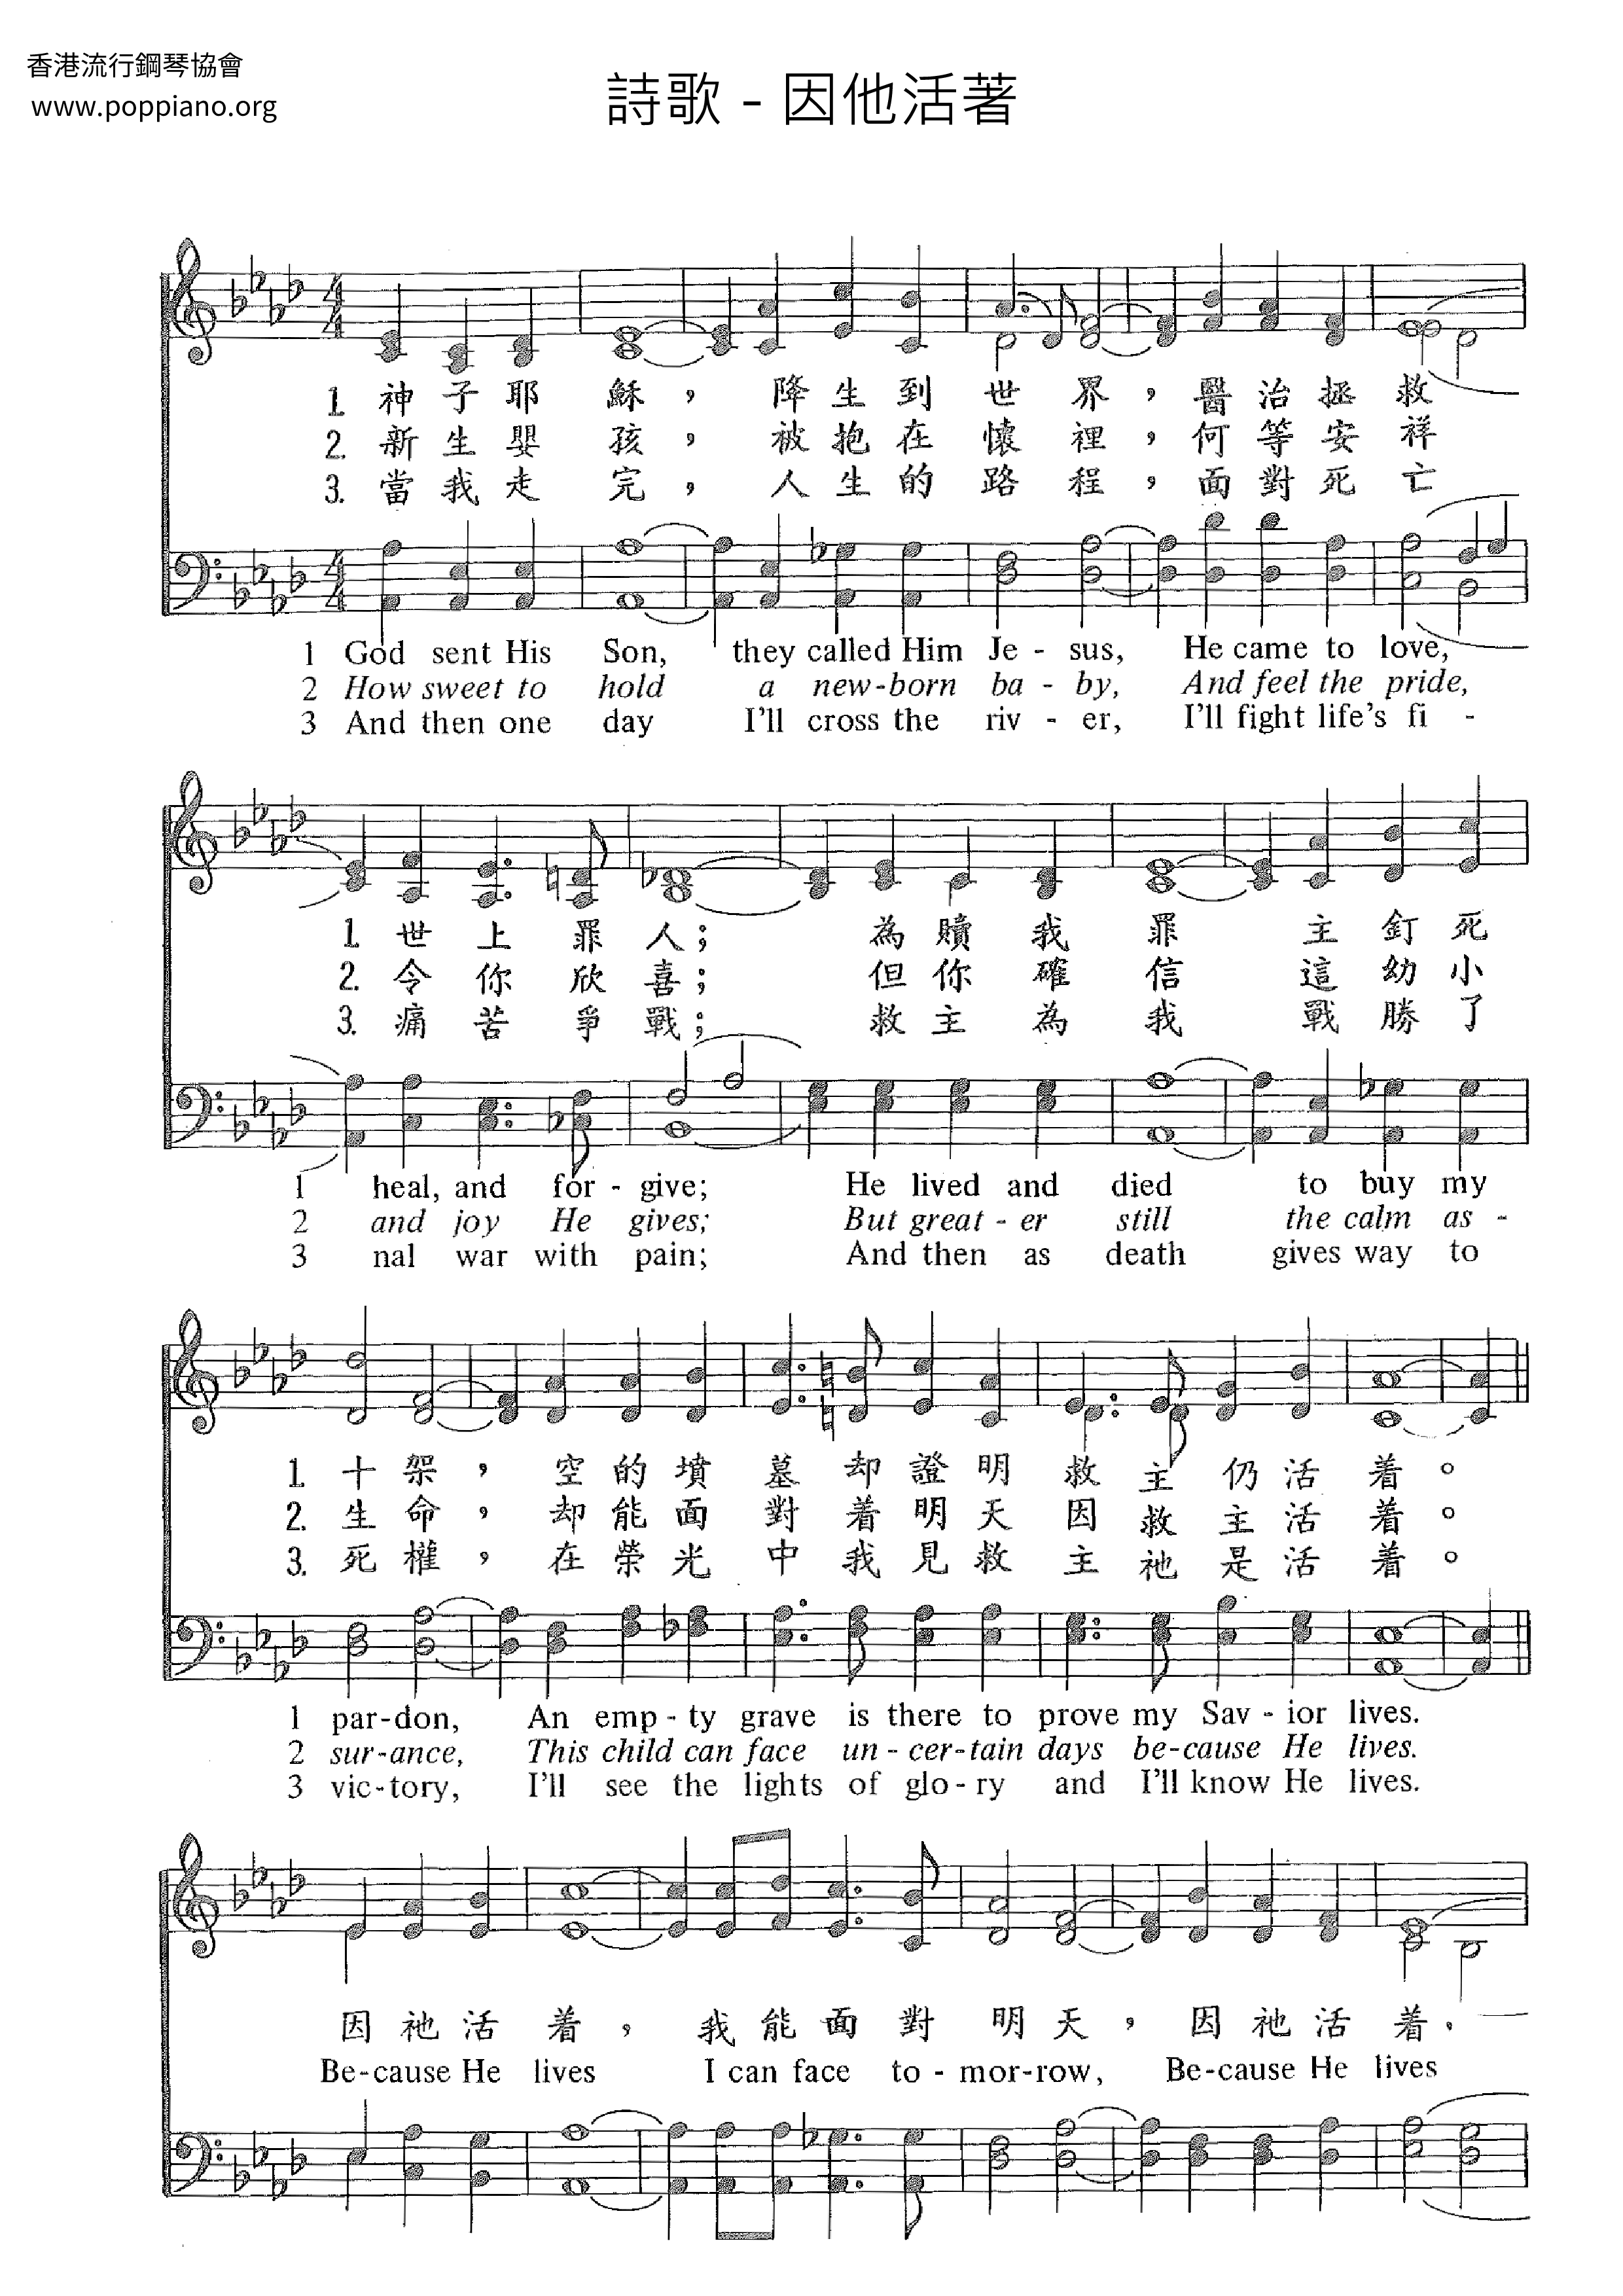 hymn-because-he-lives-sheet-music-pdf-free-score-download